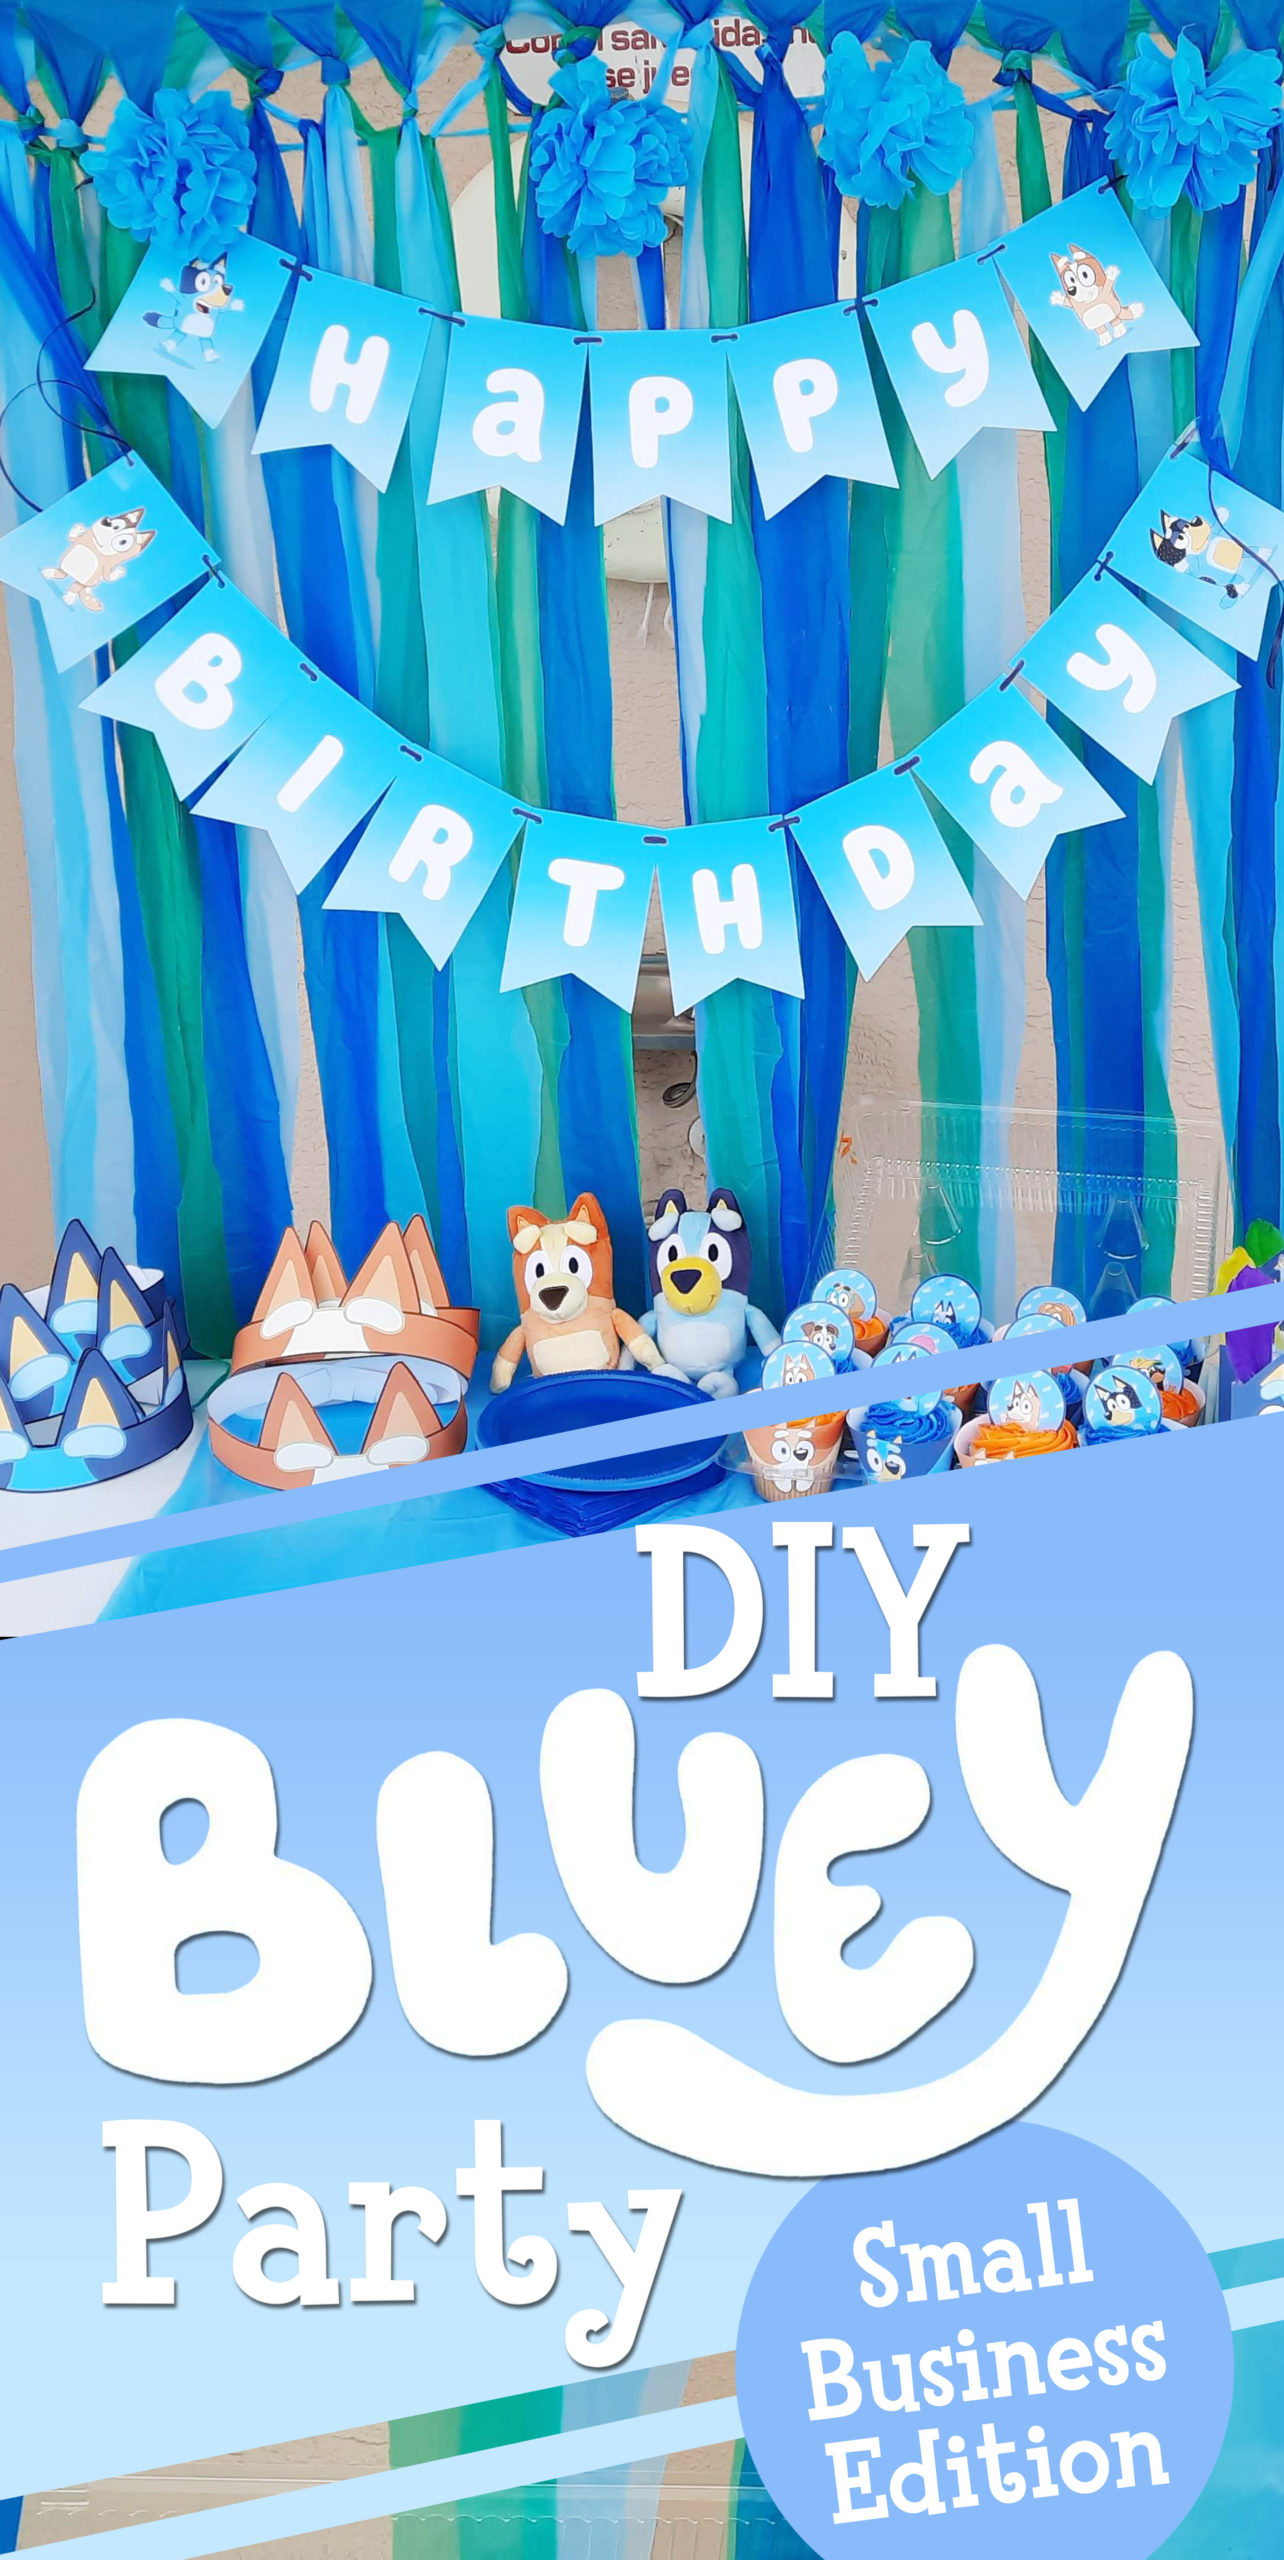 Bingo Bluey Party Supplies Banner Balloons Birthday Party Set Decoration